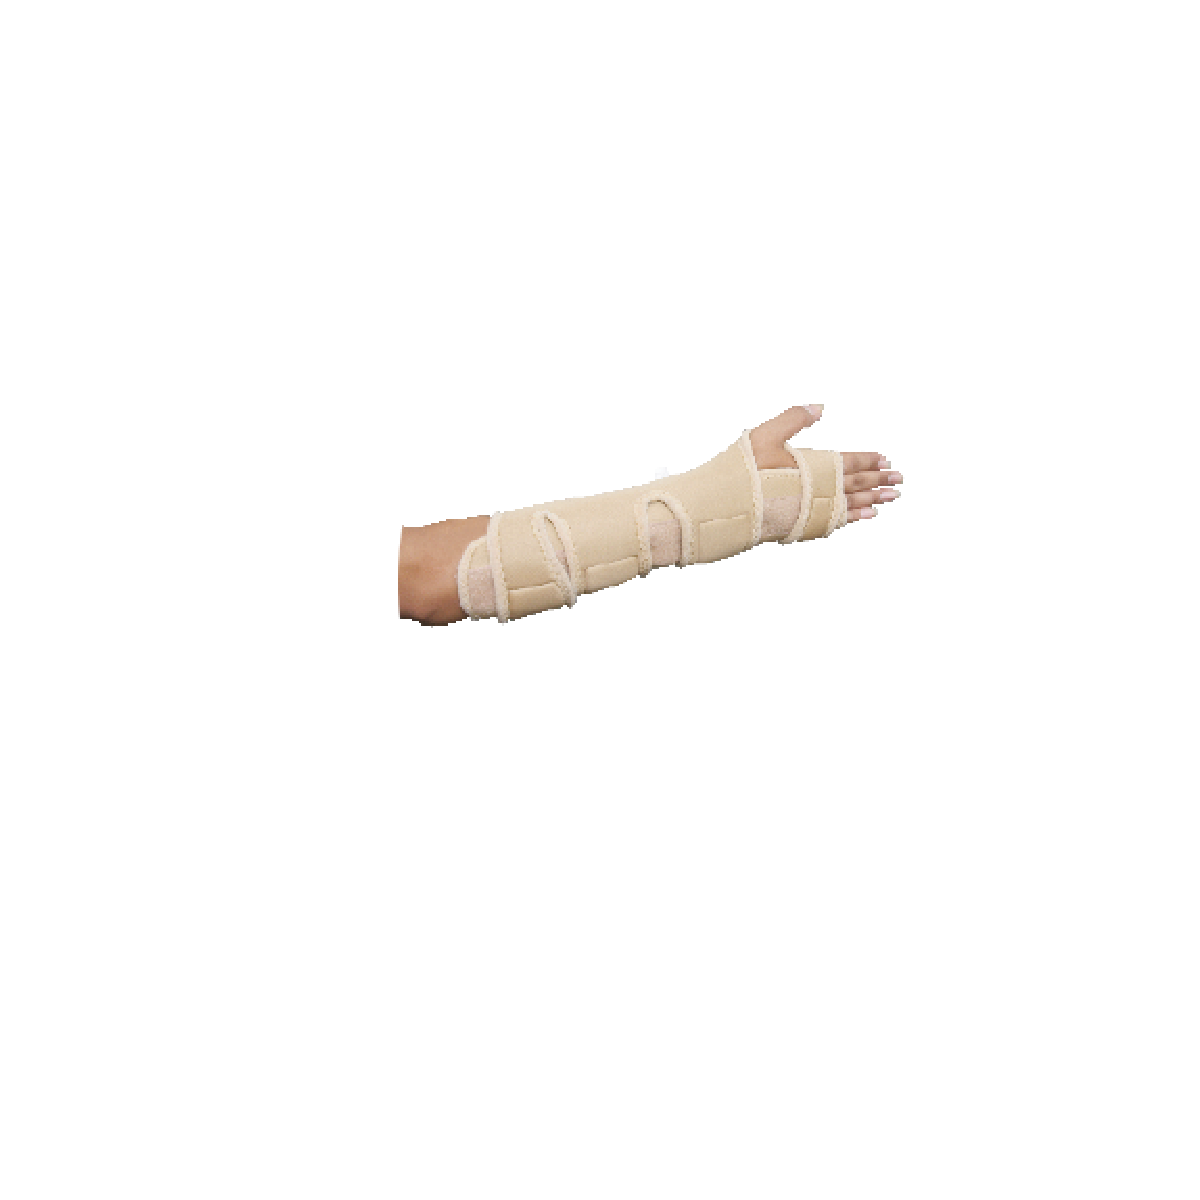 Arm Support Splint